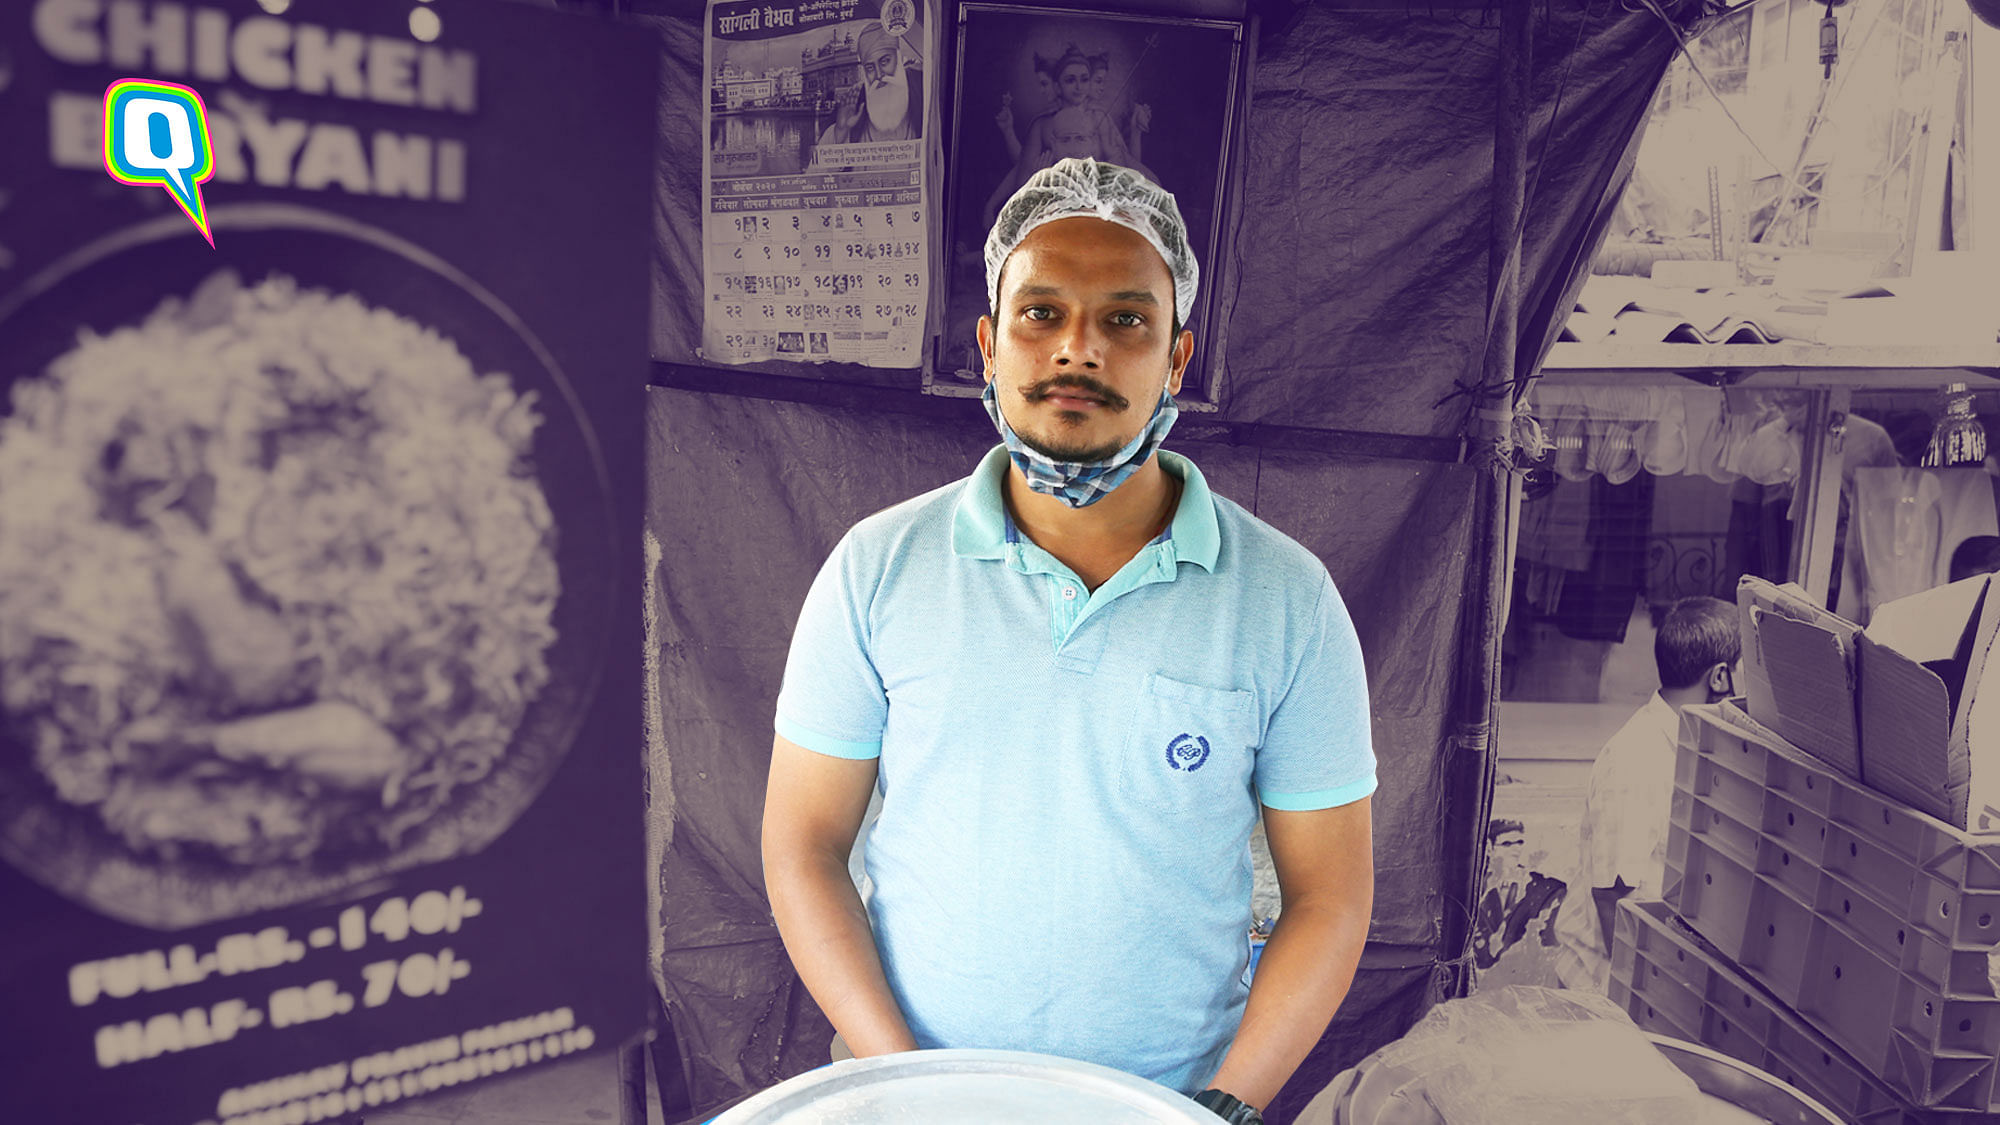 Akshay Parkar sells his ‘5-star’ quality biryani at a roadside stall.